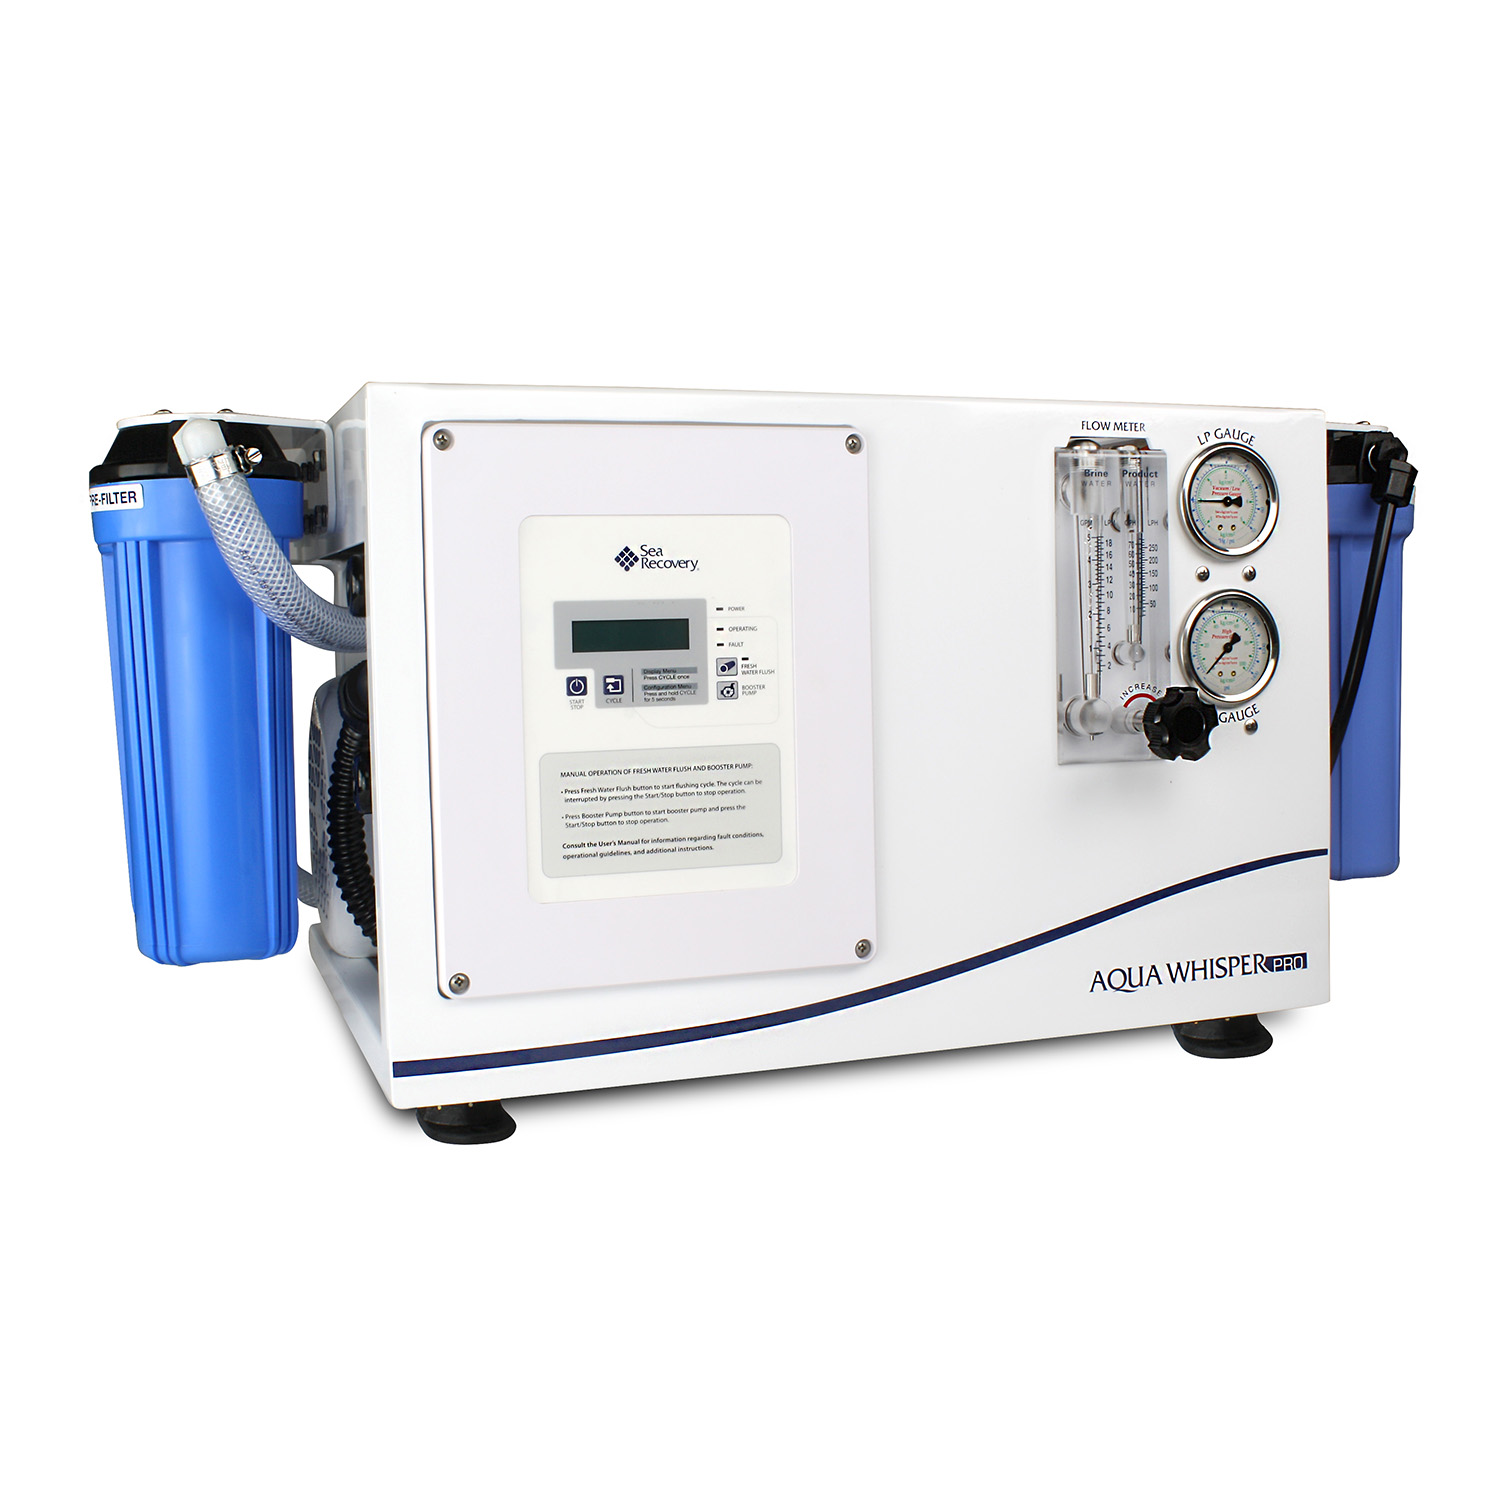 Aqua Whisper Pro 700-1 Compact watermaker